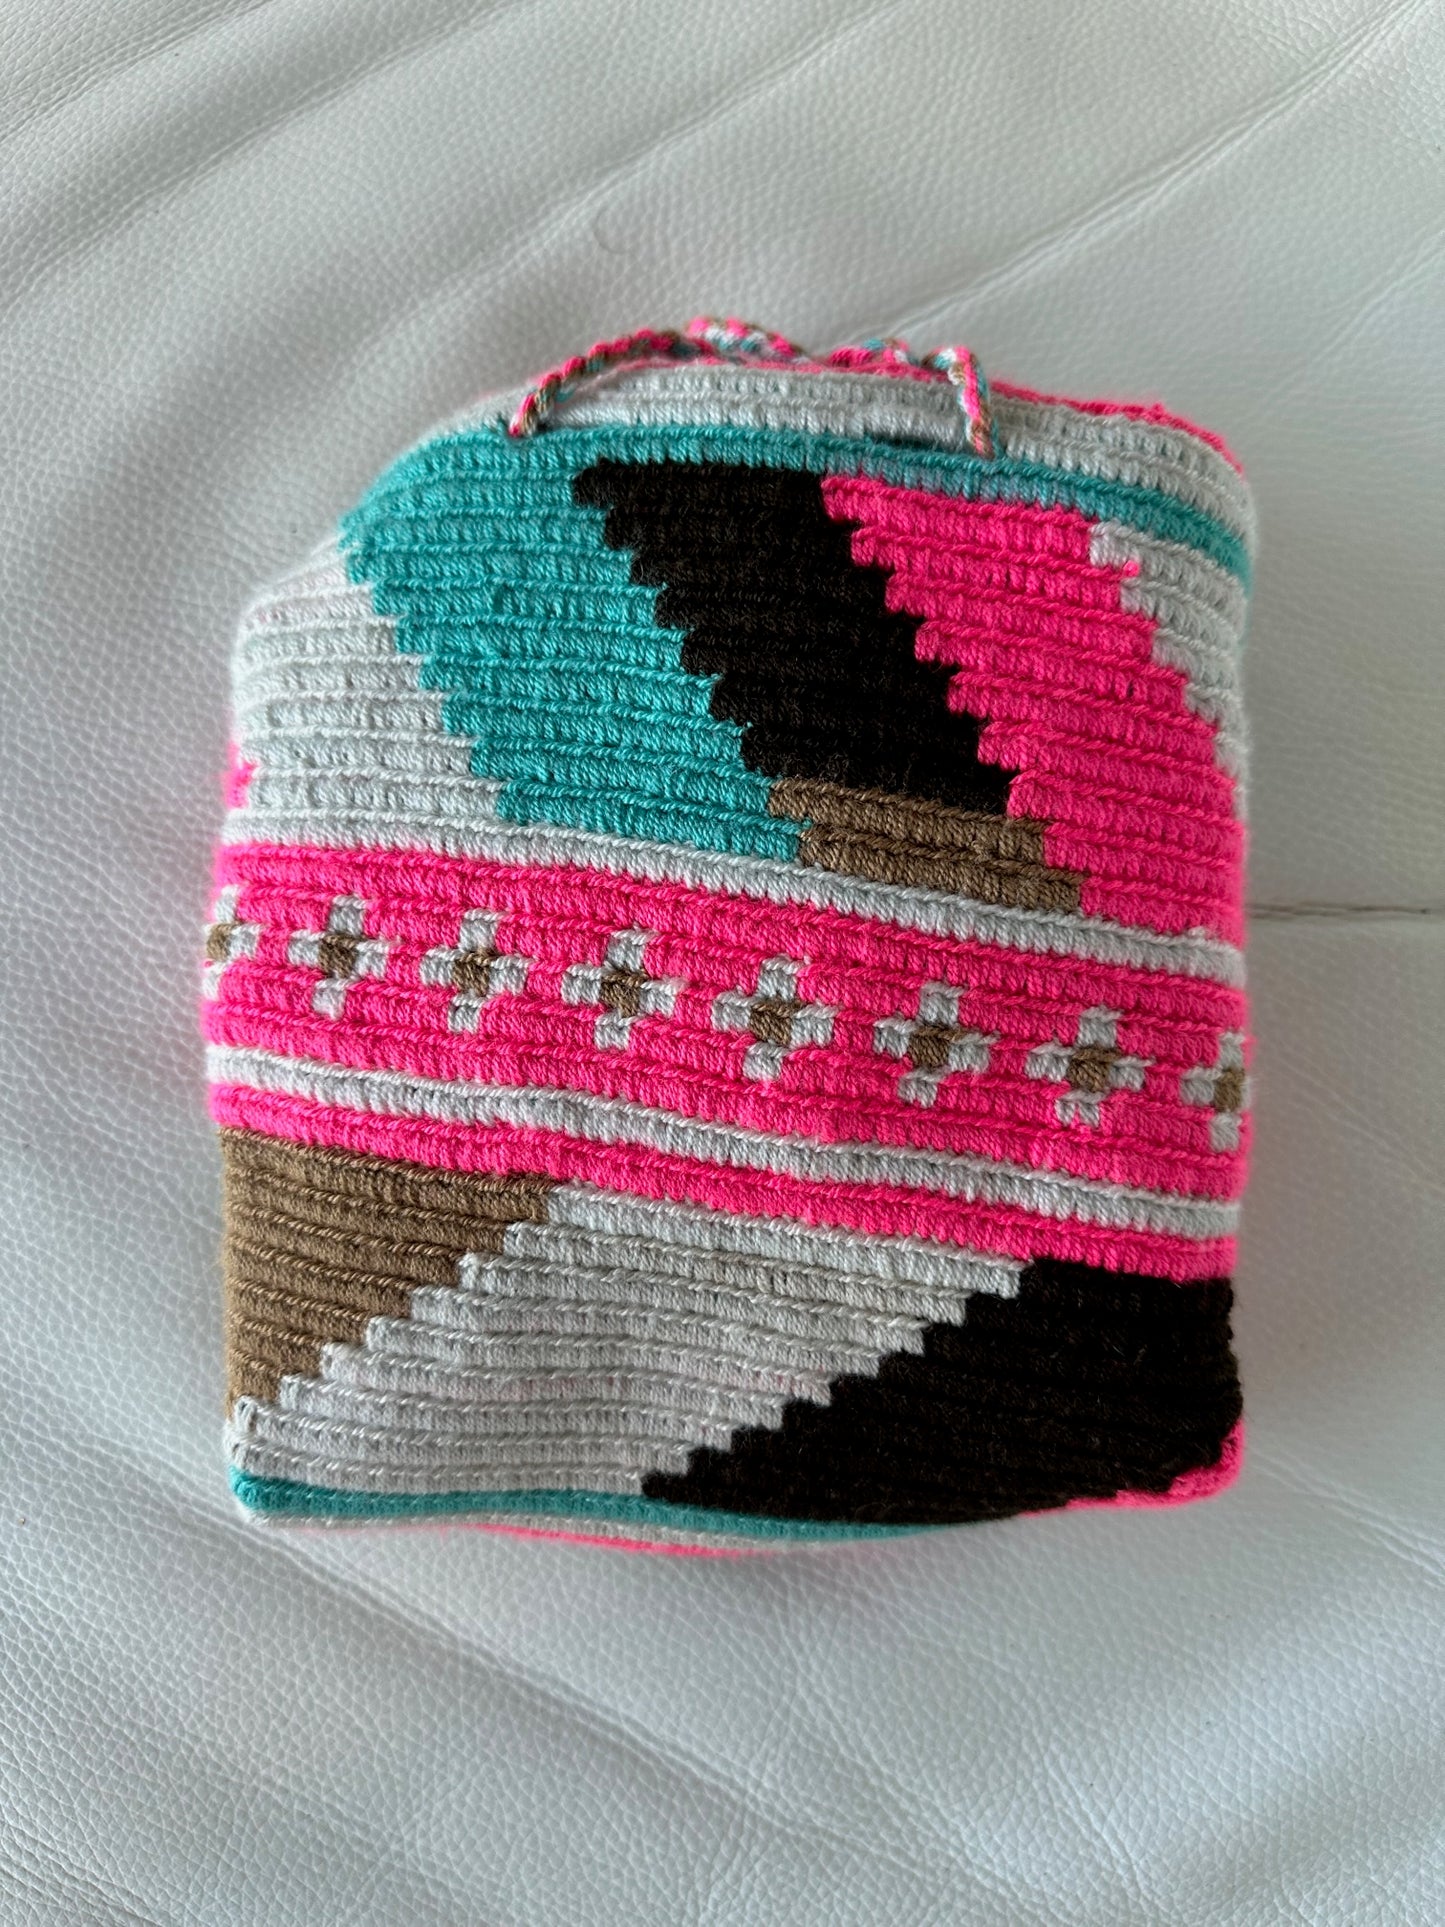 WAYUU mochila crossbody bag - Colombian Guajira desert native Wayuu hand crocheted cotton